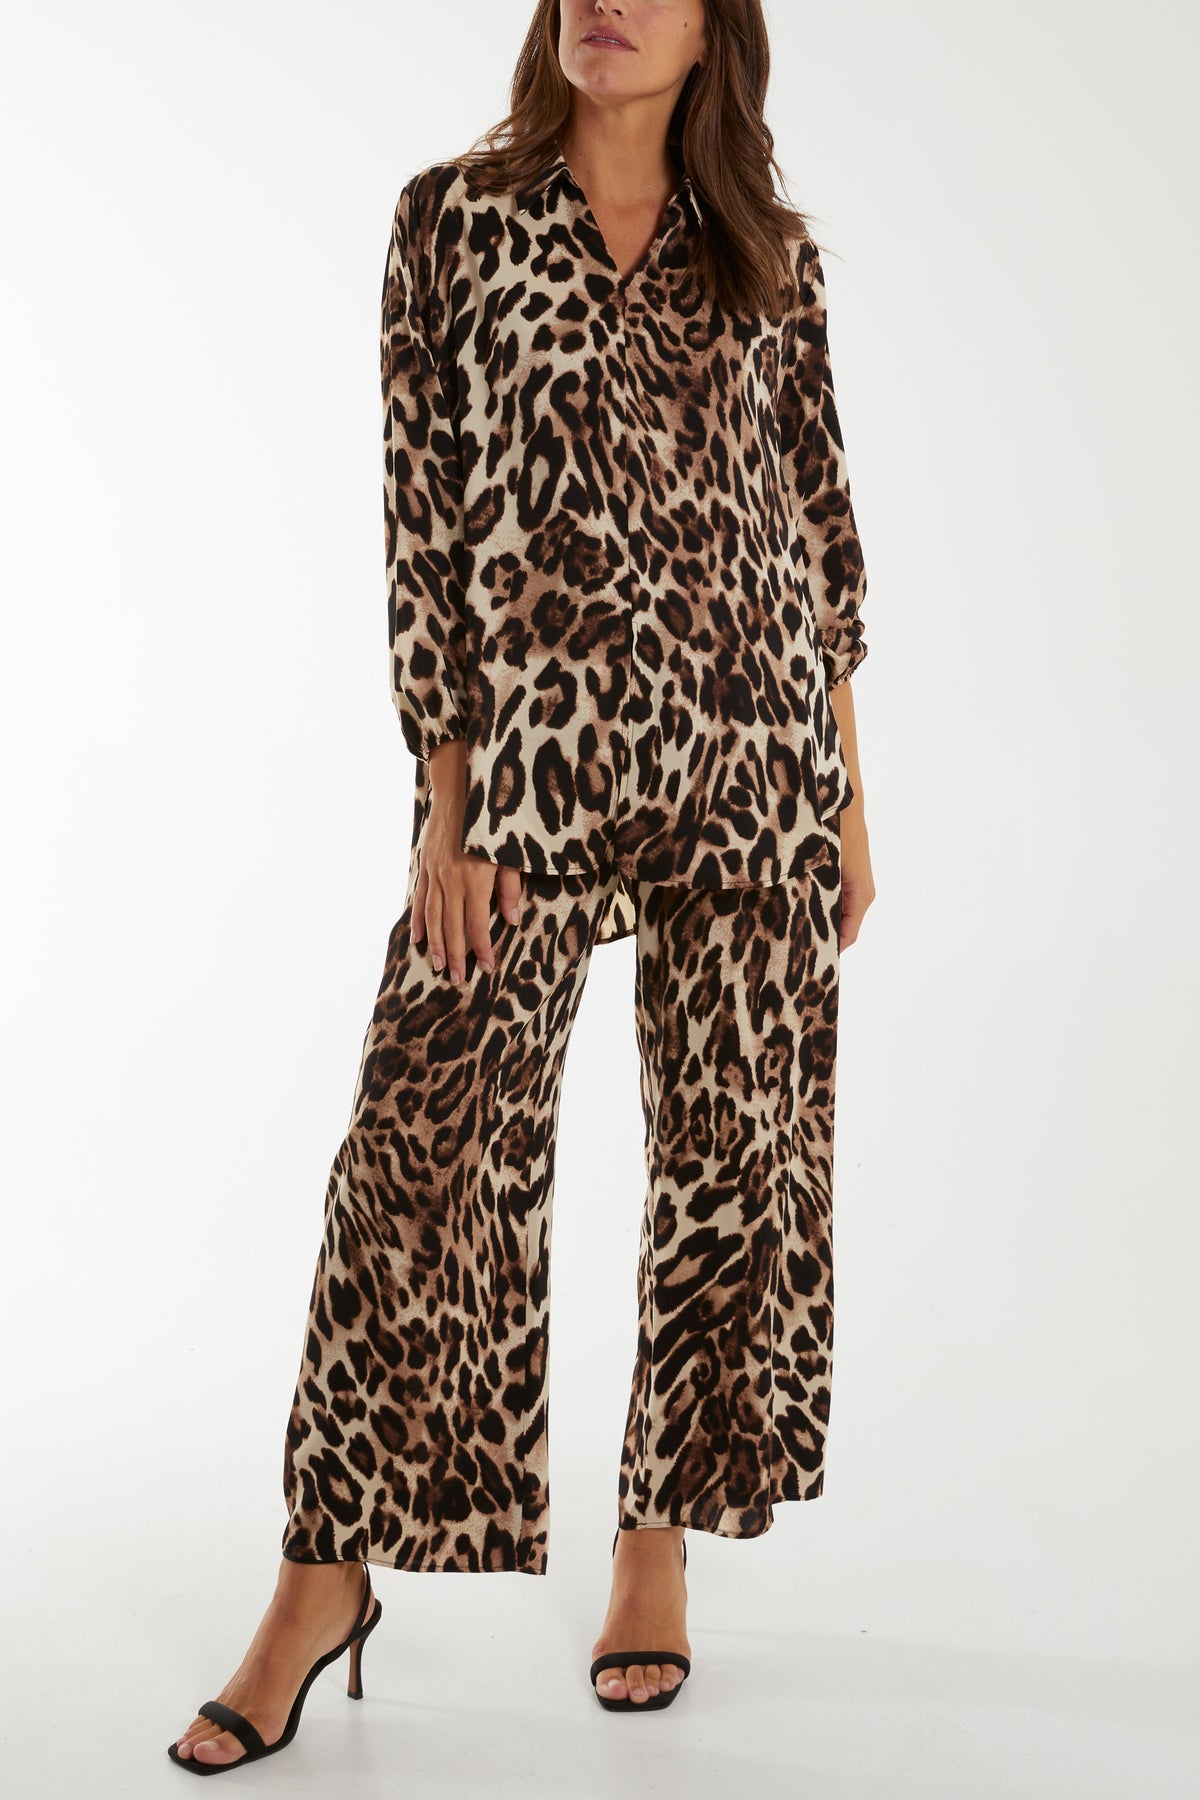 Leopard Printed Shirt Co-Ord Set